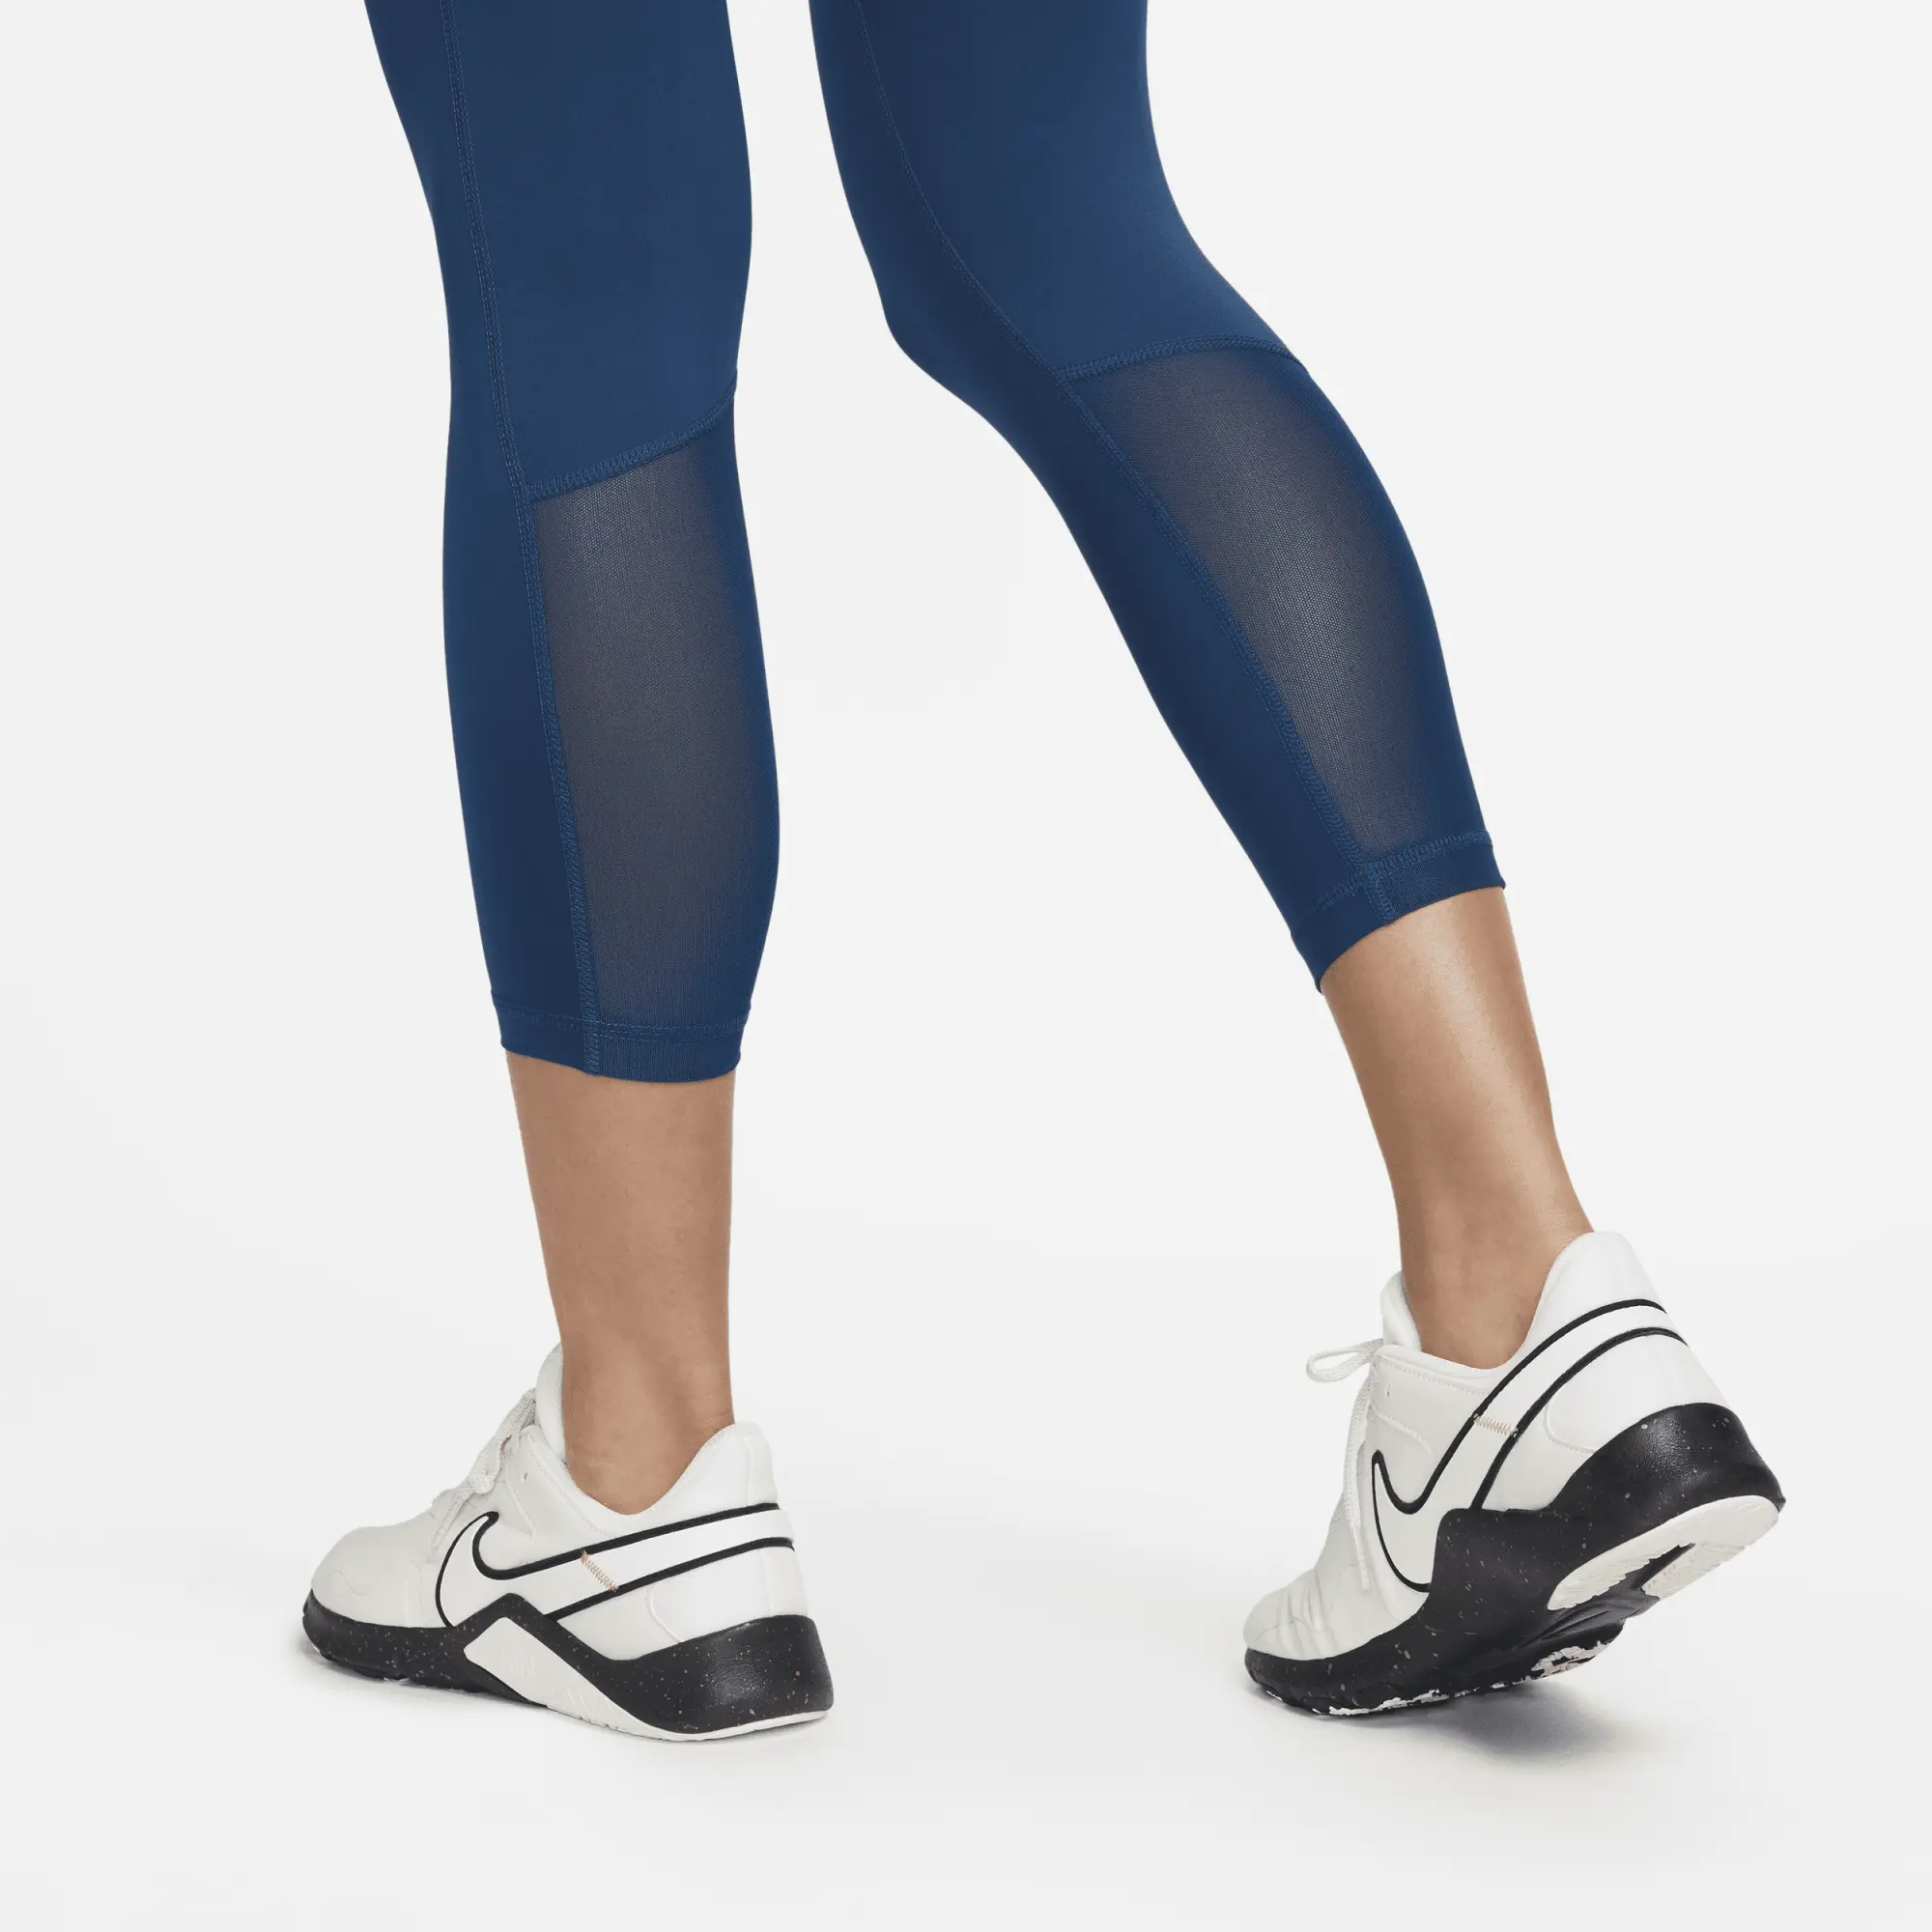 Nike Pro 365 Women's Mid-Rise Cropped Mesh Panel Leggings - Blue, CZ9803-460